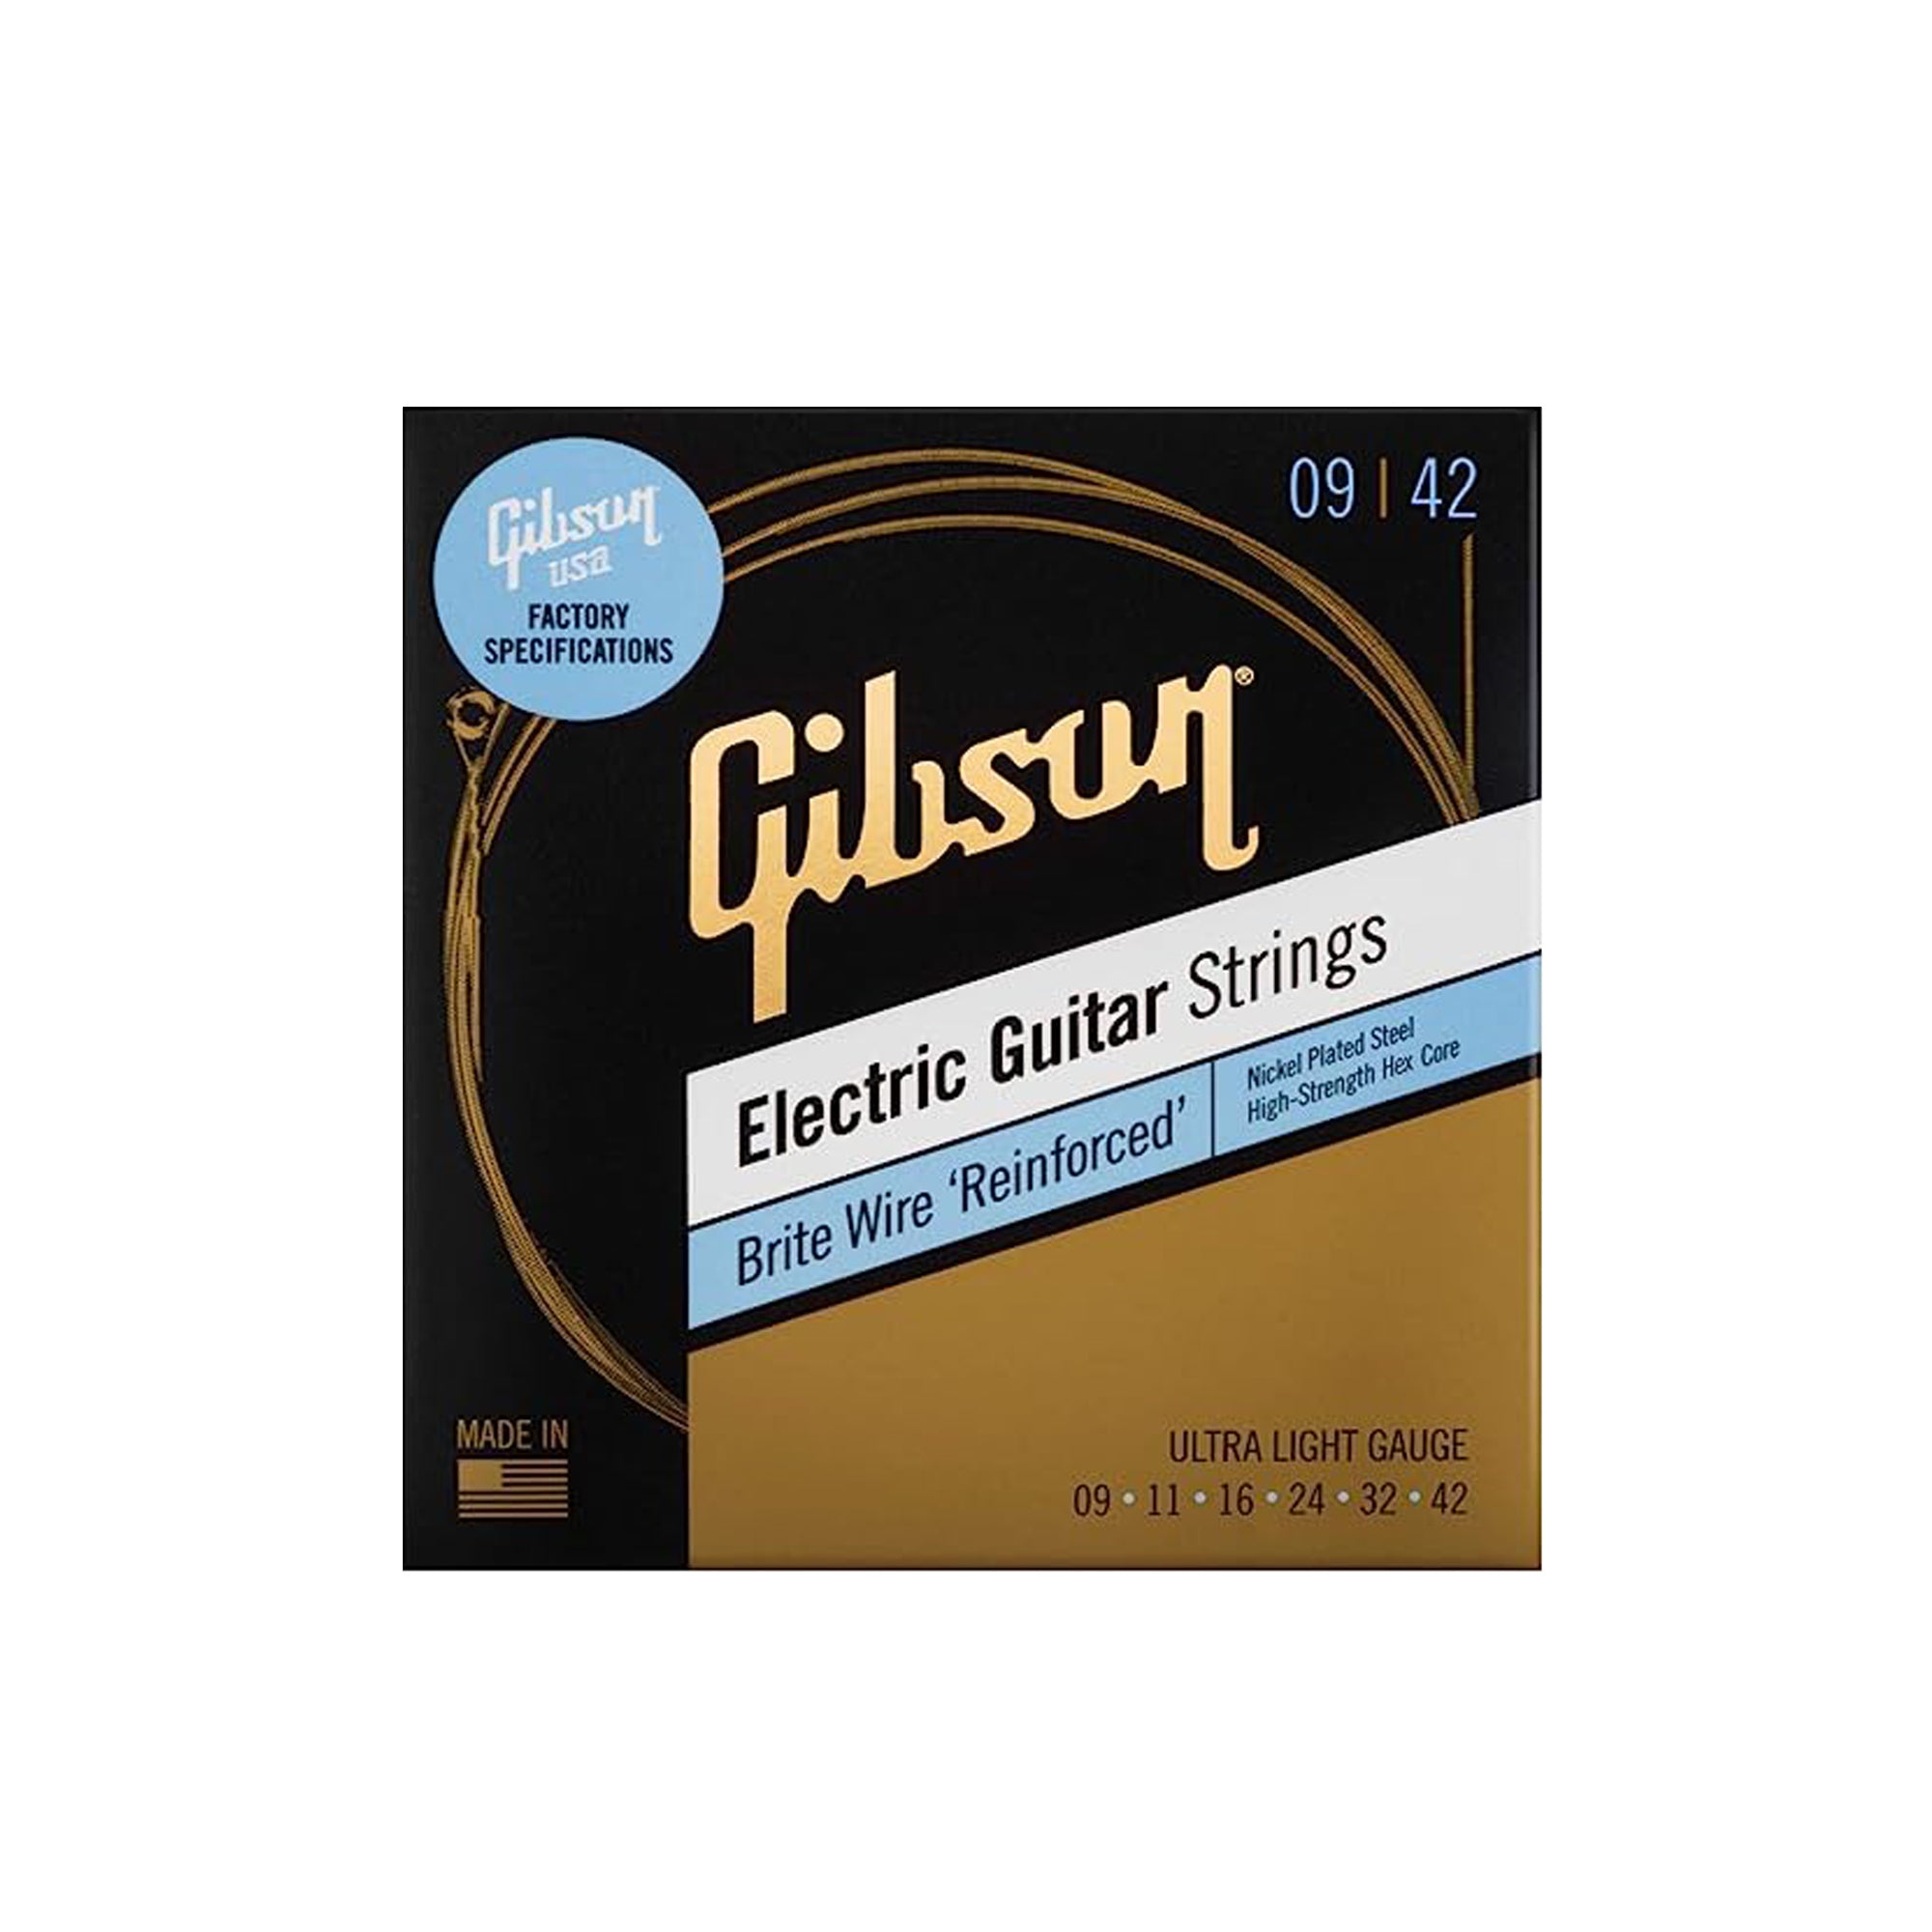 Gibson Gear SEG-BWR9 Brite Wire 'Reinforced' Electric Guitar Strings - .009-.042 Ultra Light